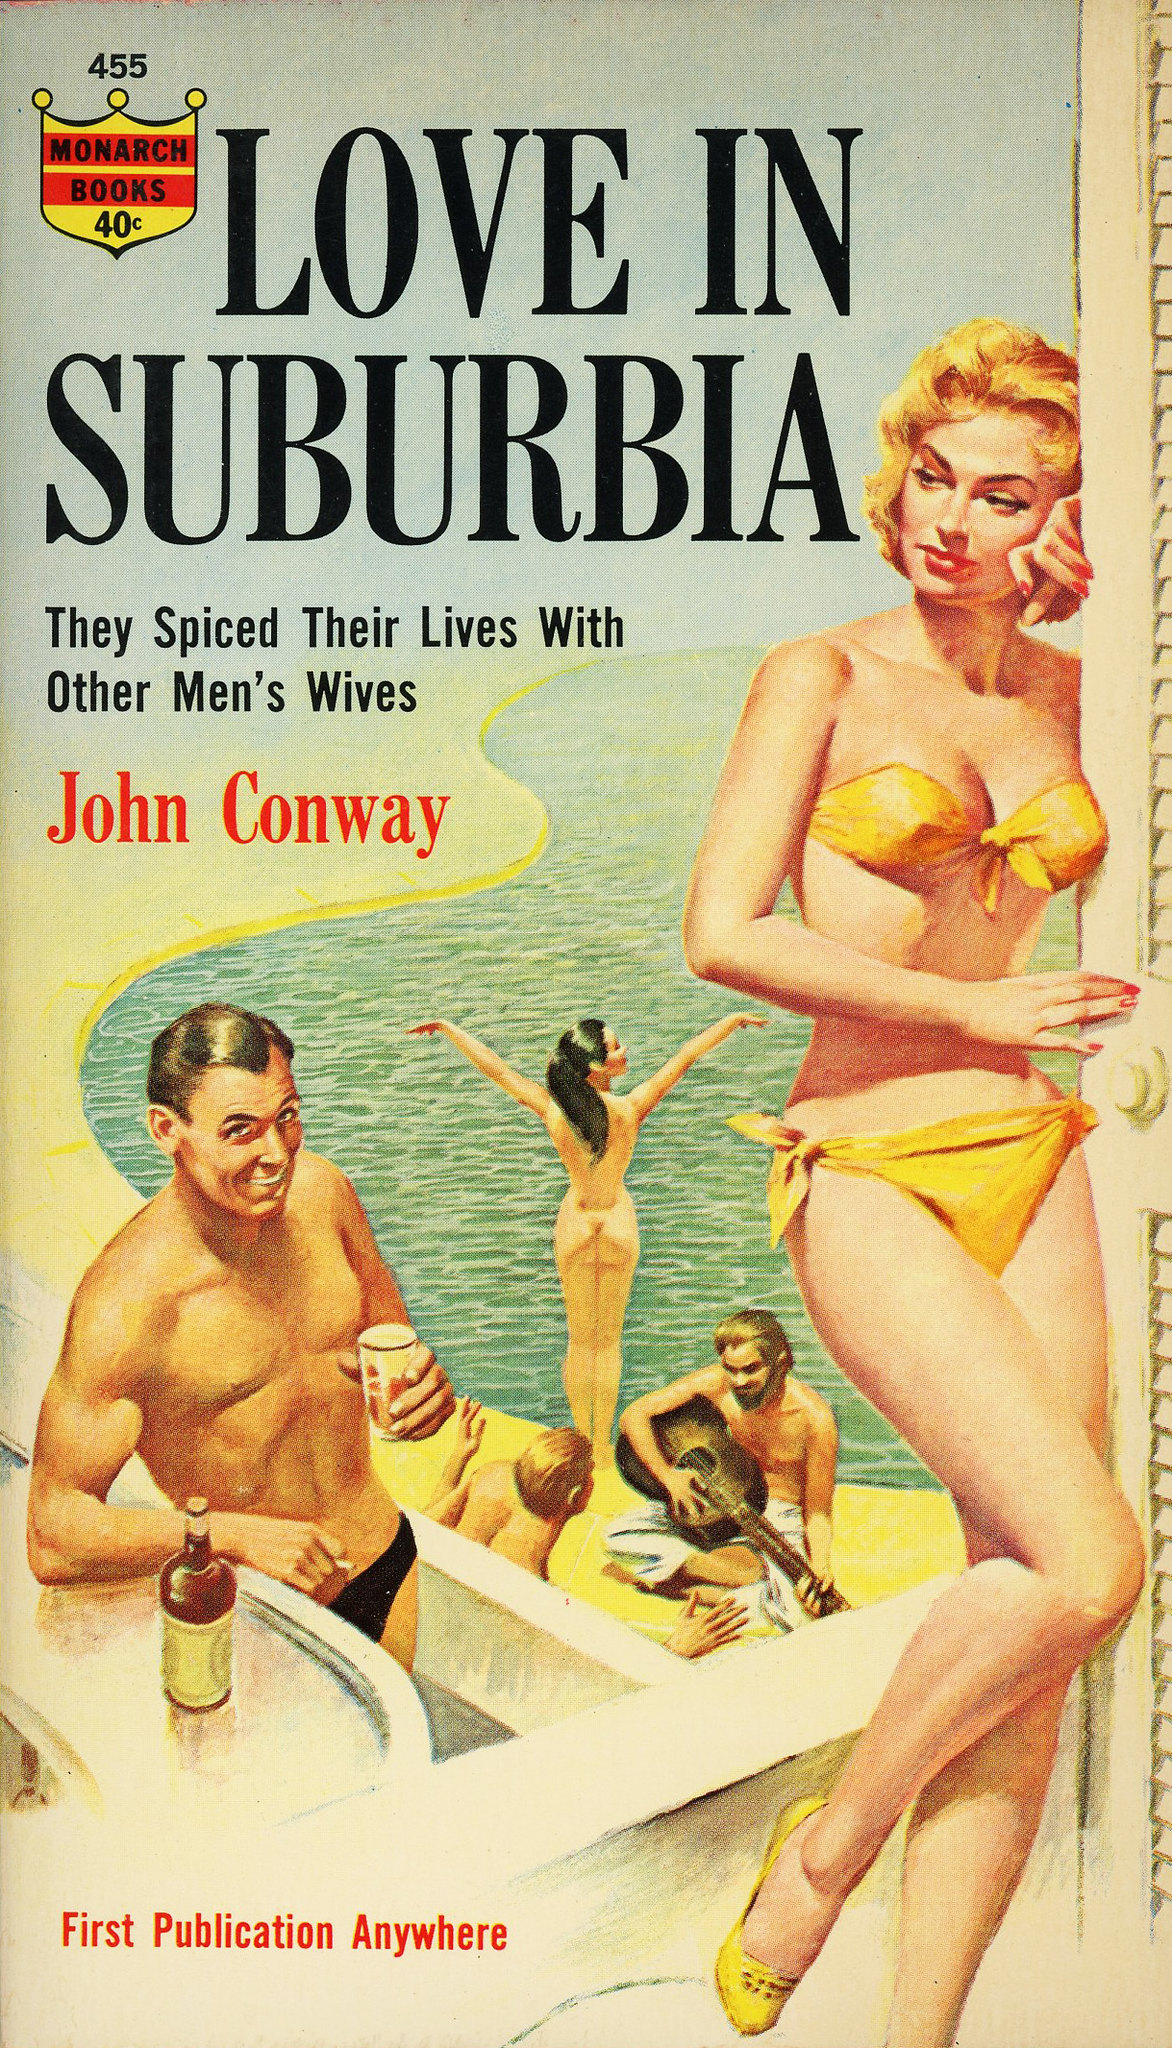 8754733791-monarch-books-455-john-conway-love-in-suburbia